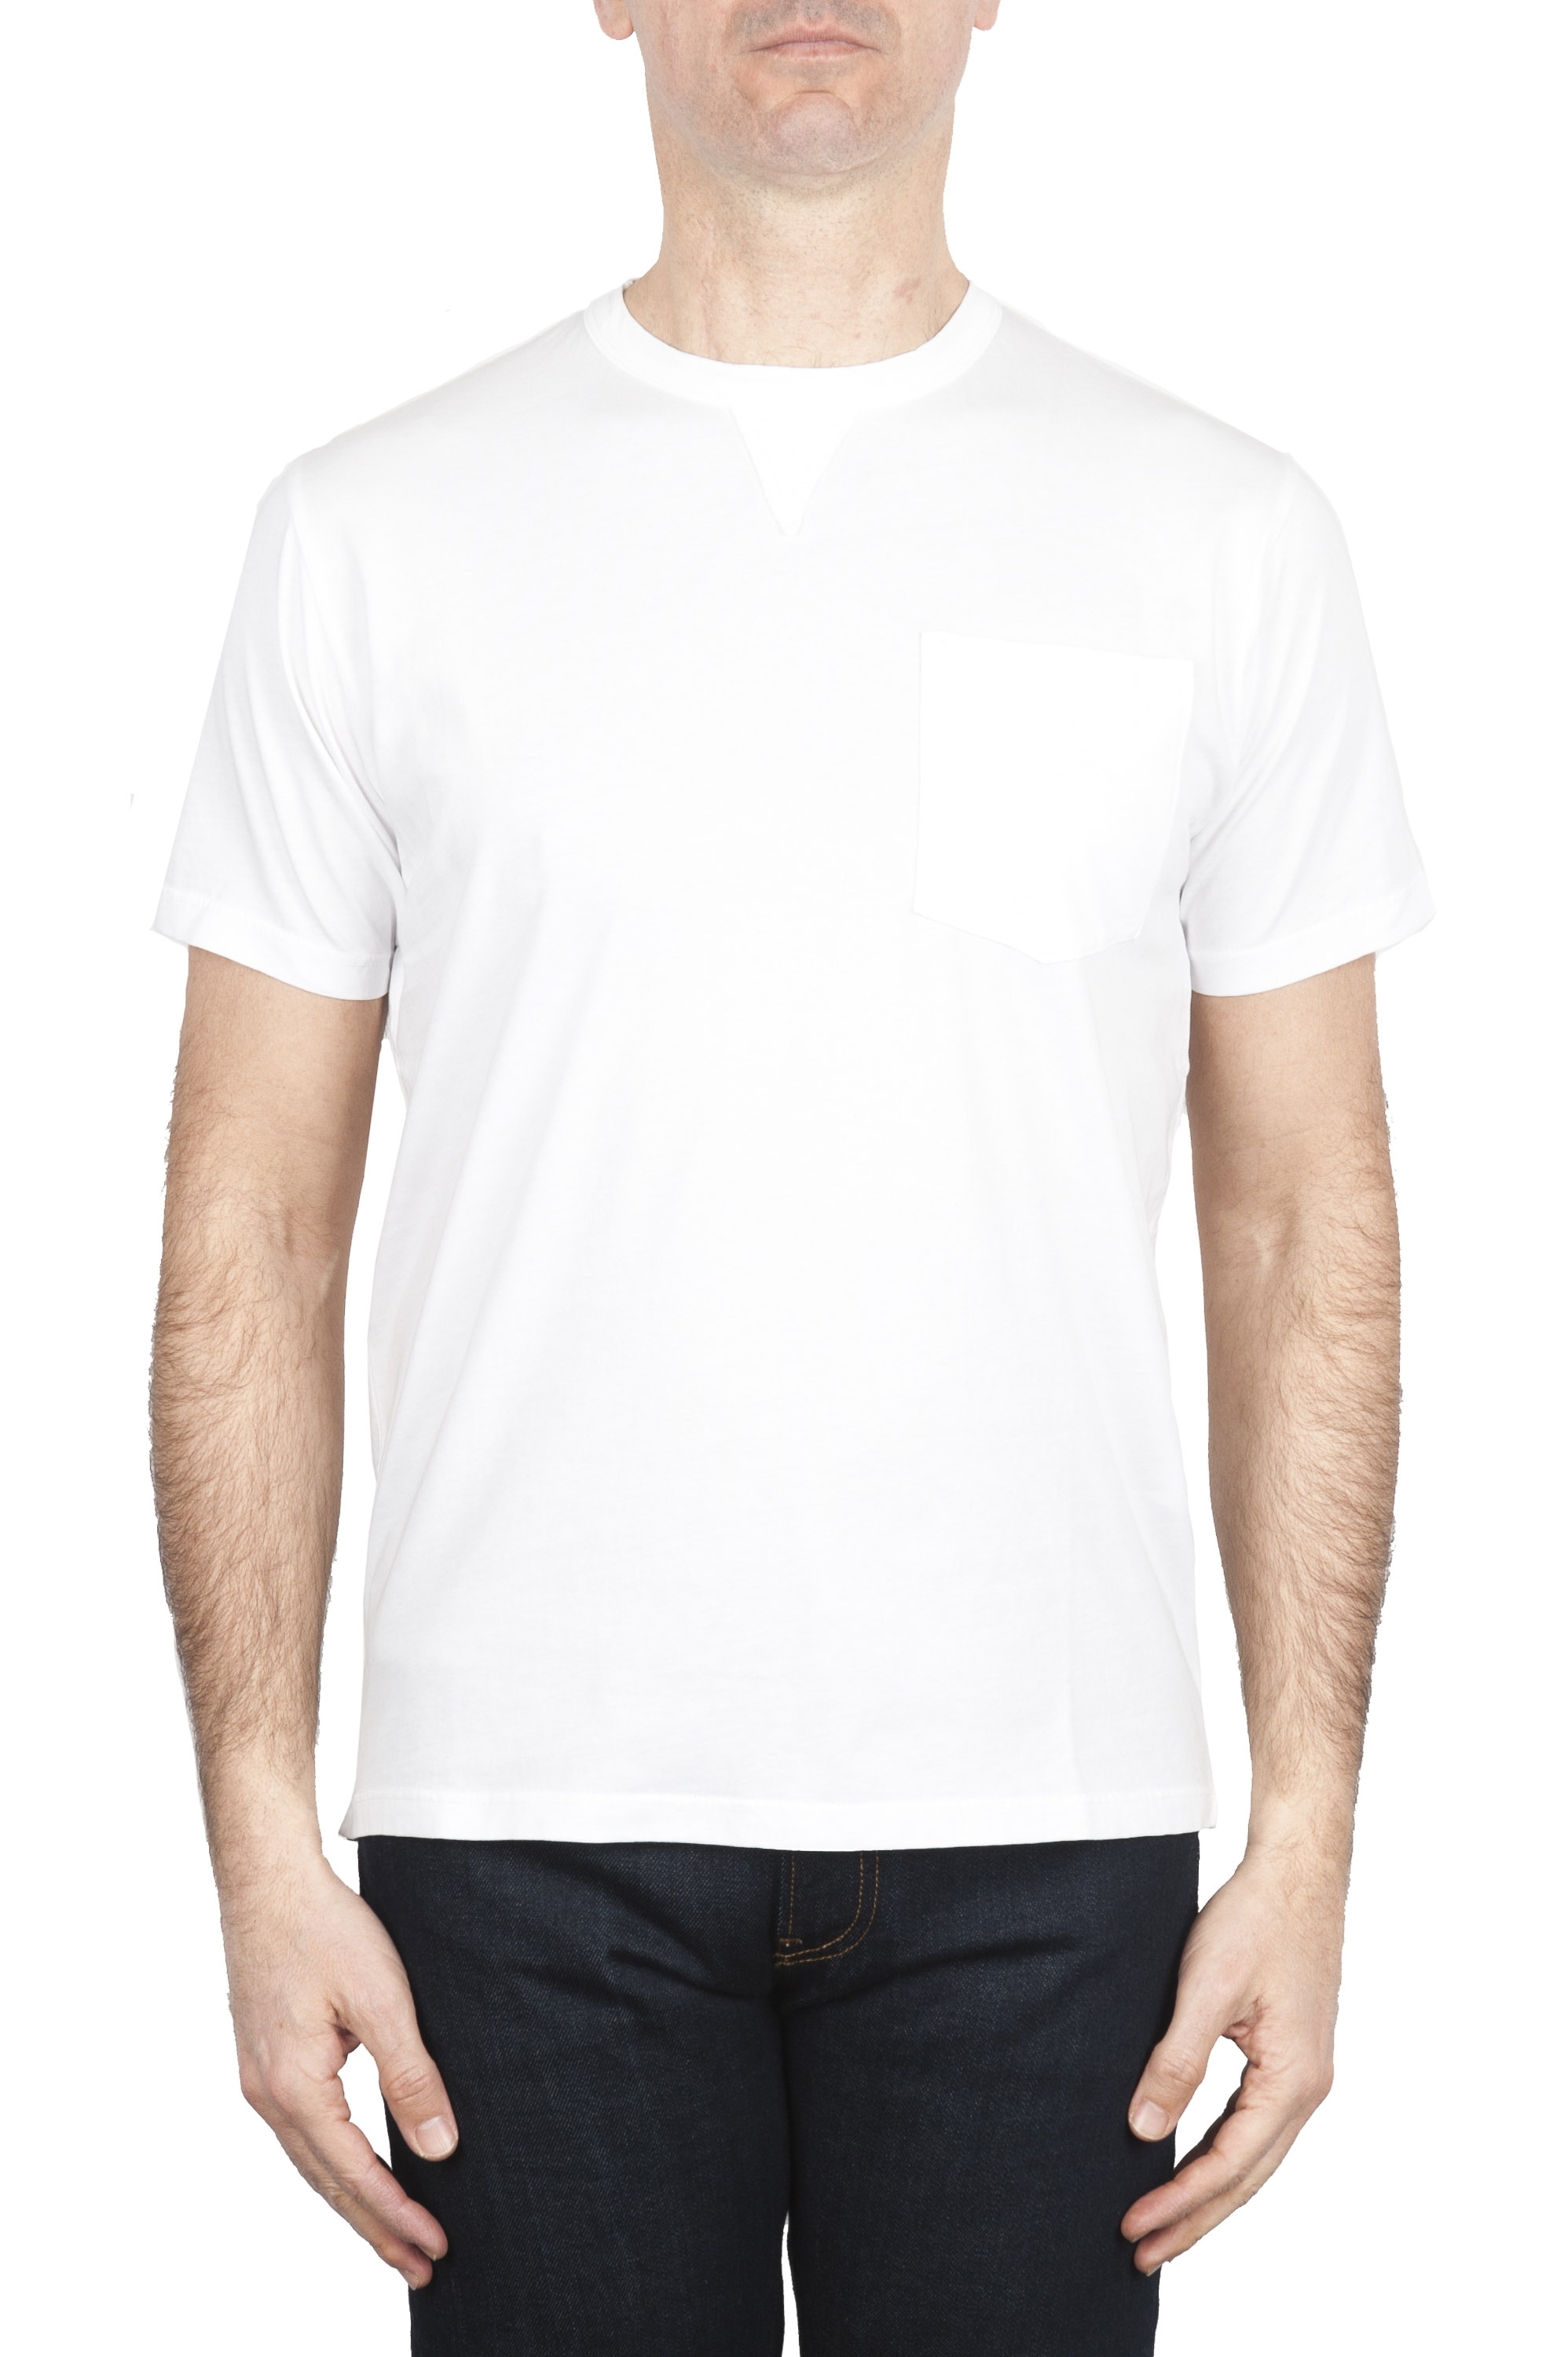 SBU 01655 Round neck patch pocket cotton t-shirt white 01